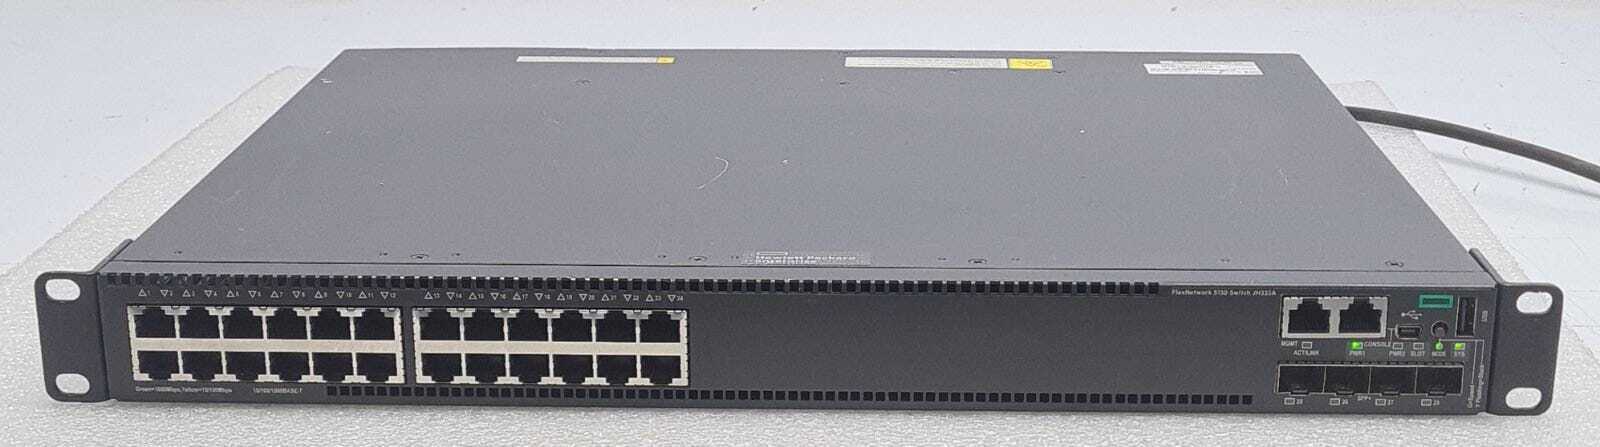 HP HPE FlexNetwork 5130 24G PoE+ 4SFP+ 1-slot HI Switch JH323A Server